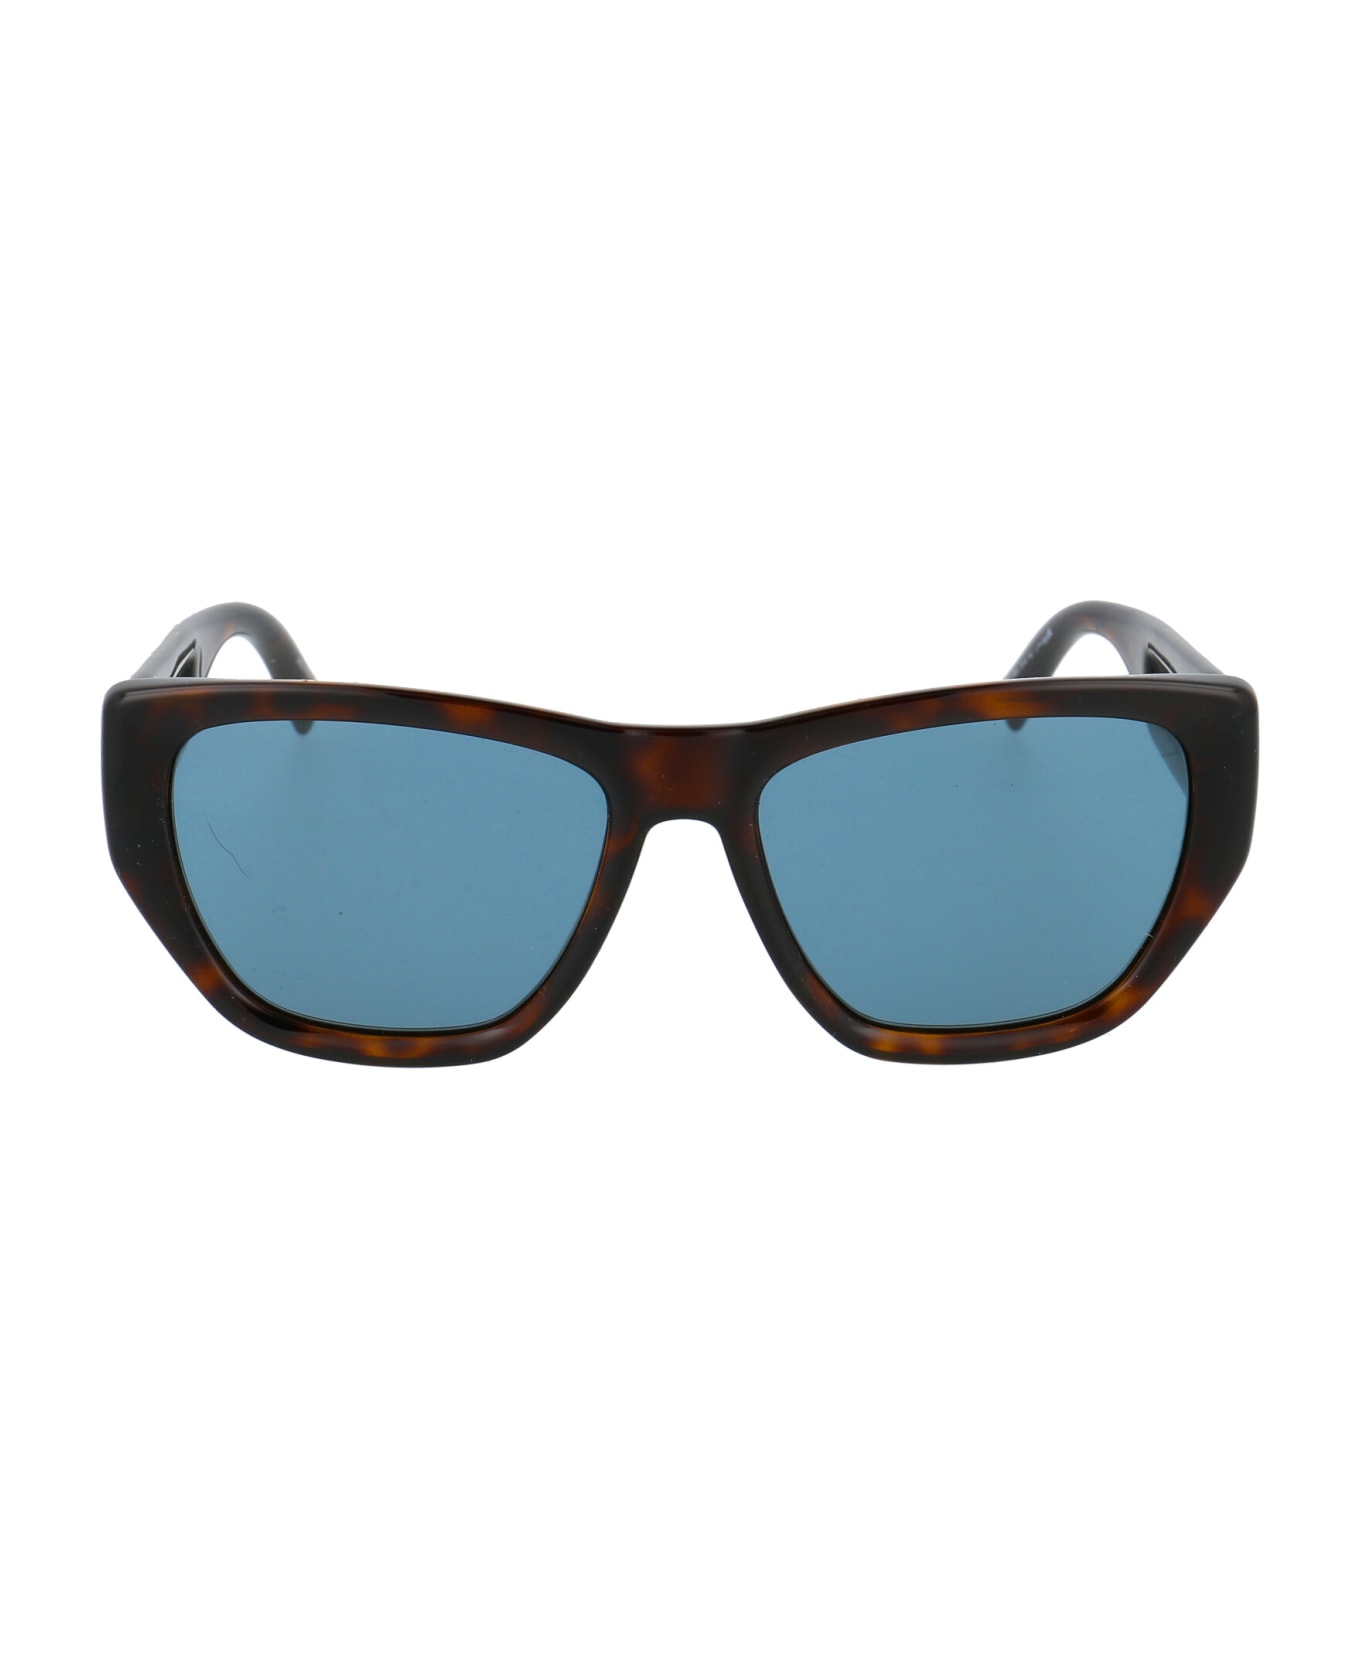 Givenchy Eyewear Gv 7202/s Sunglasses - 086KU HAVANA